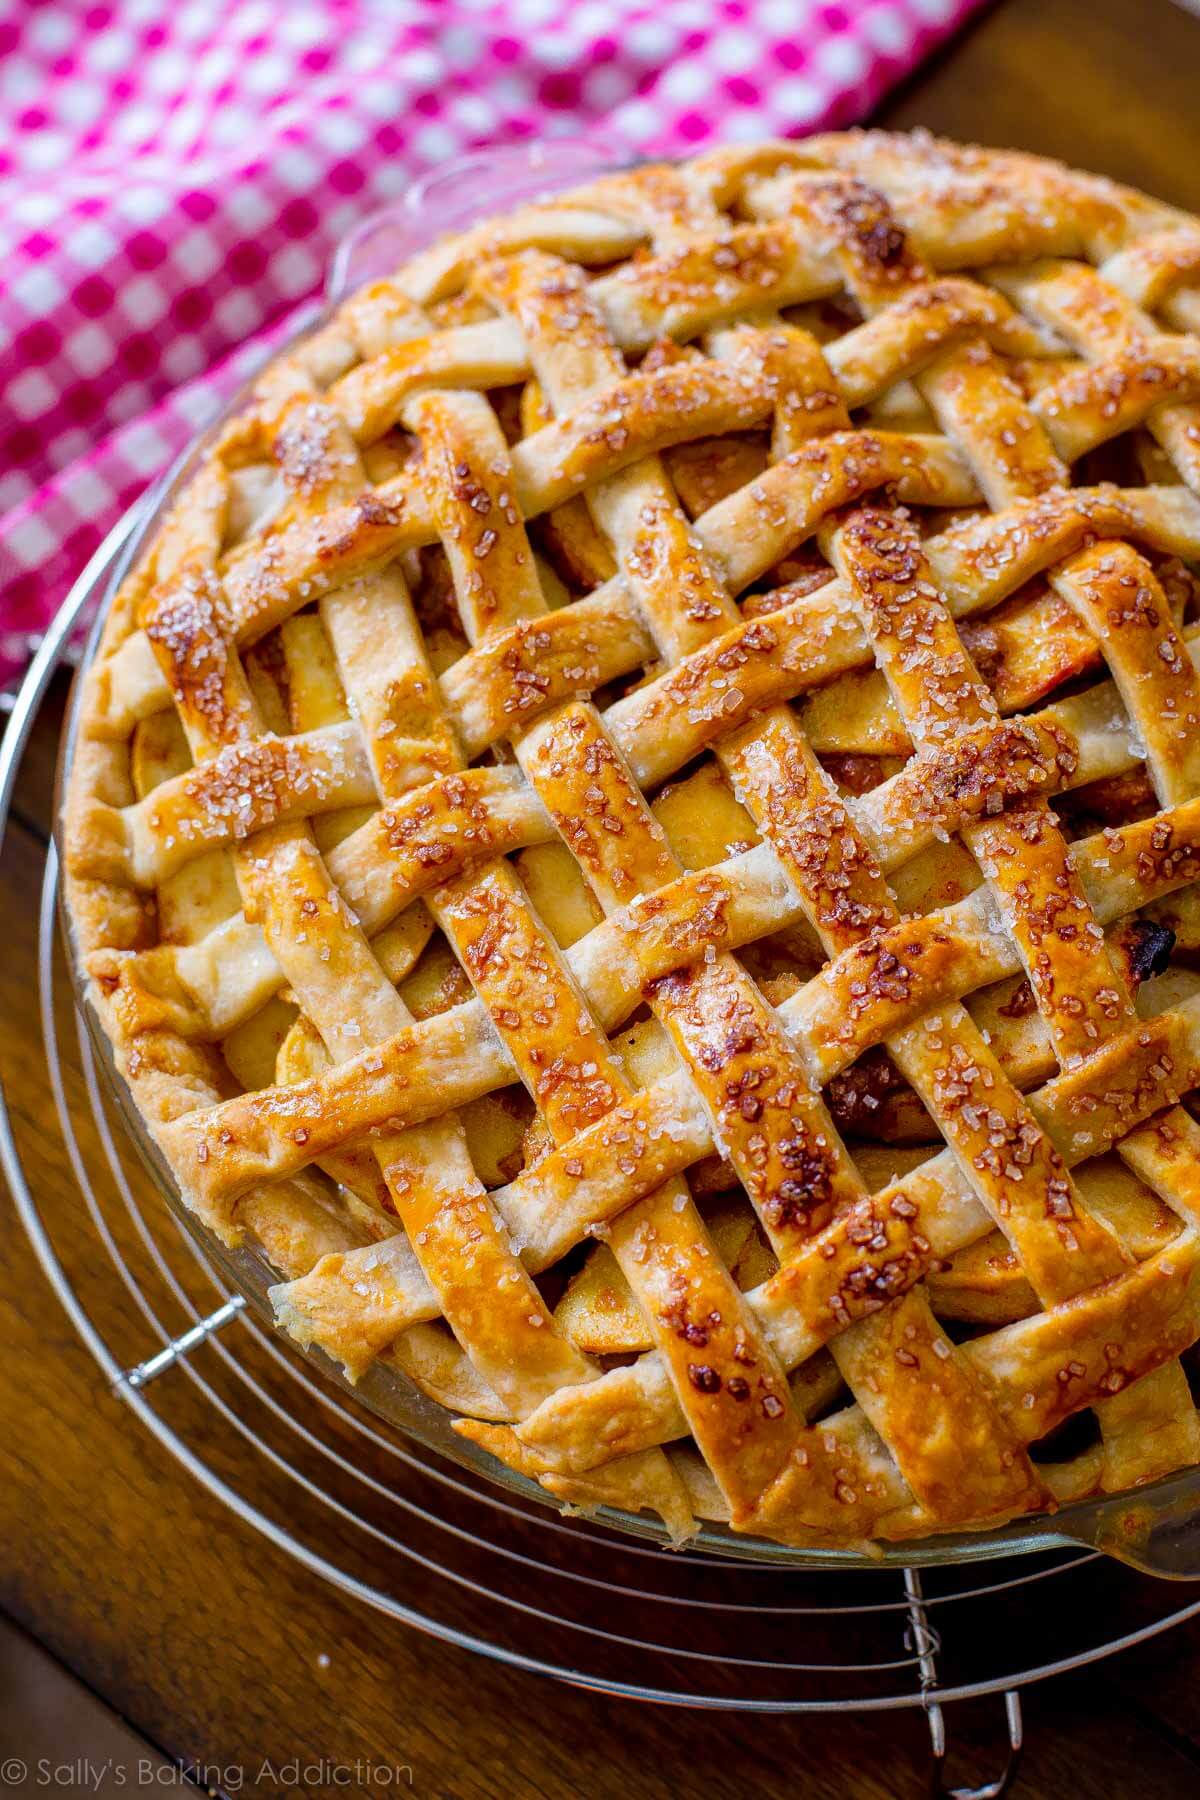 https://sallysbakingaddiction.com/2013/07/04/salted-caramel-apple-pie/